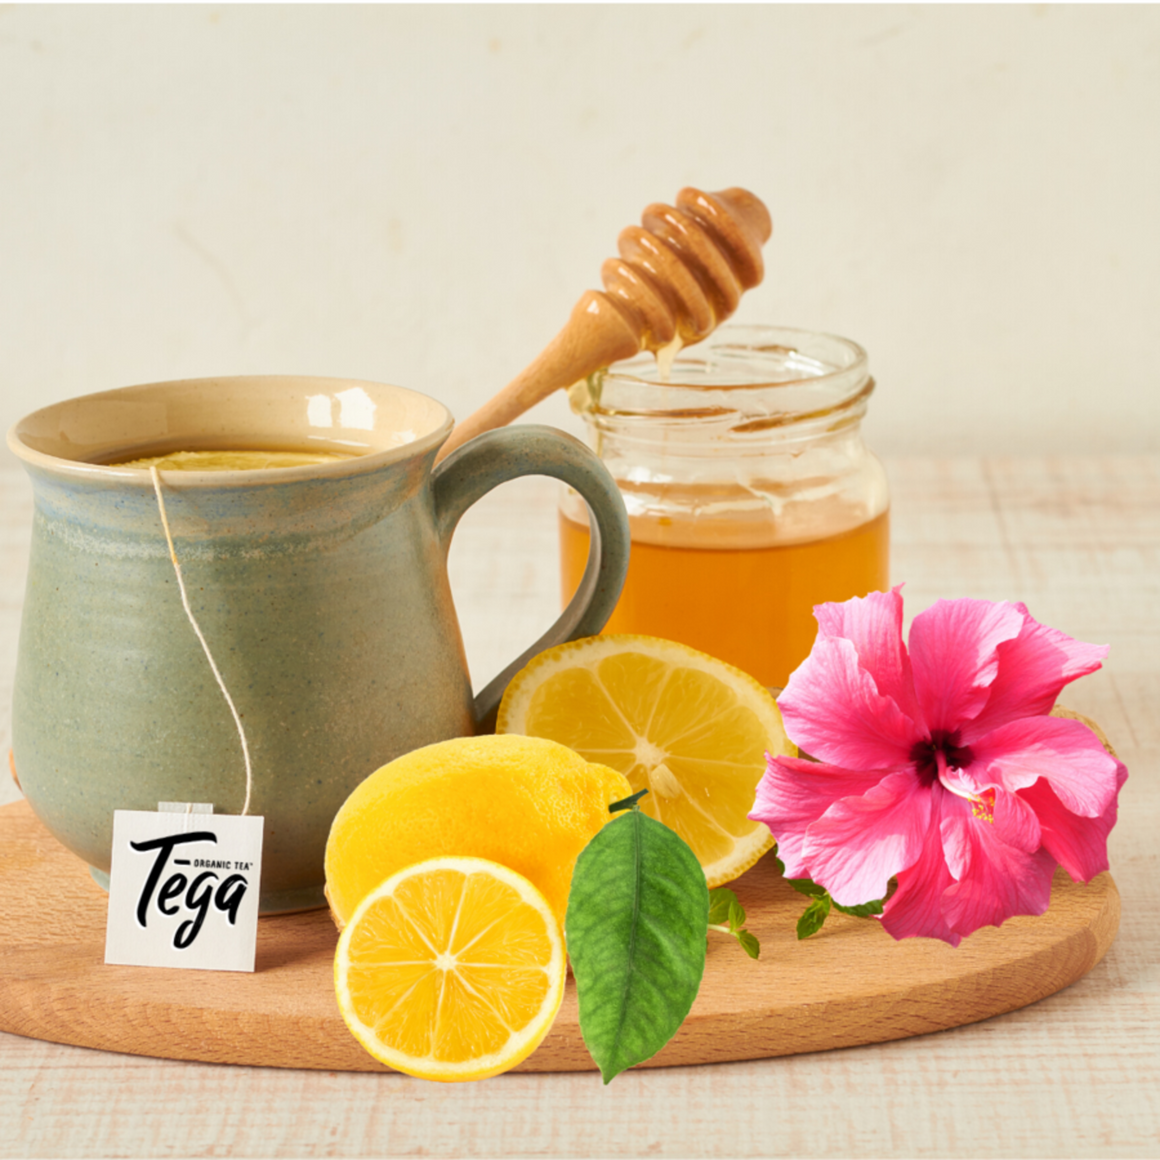 Tega Organic Tea - Lemon Hibiscus Herbal Tea, 16 Count